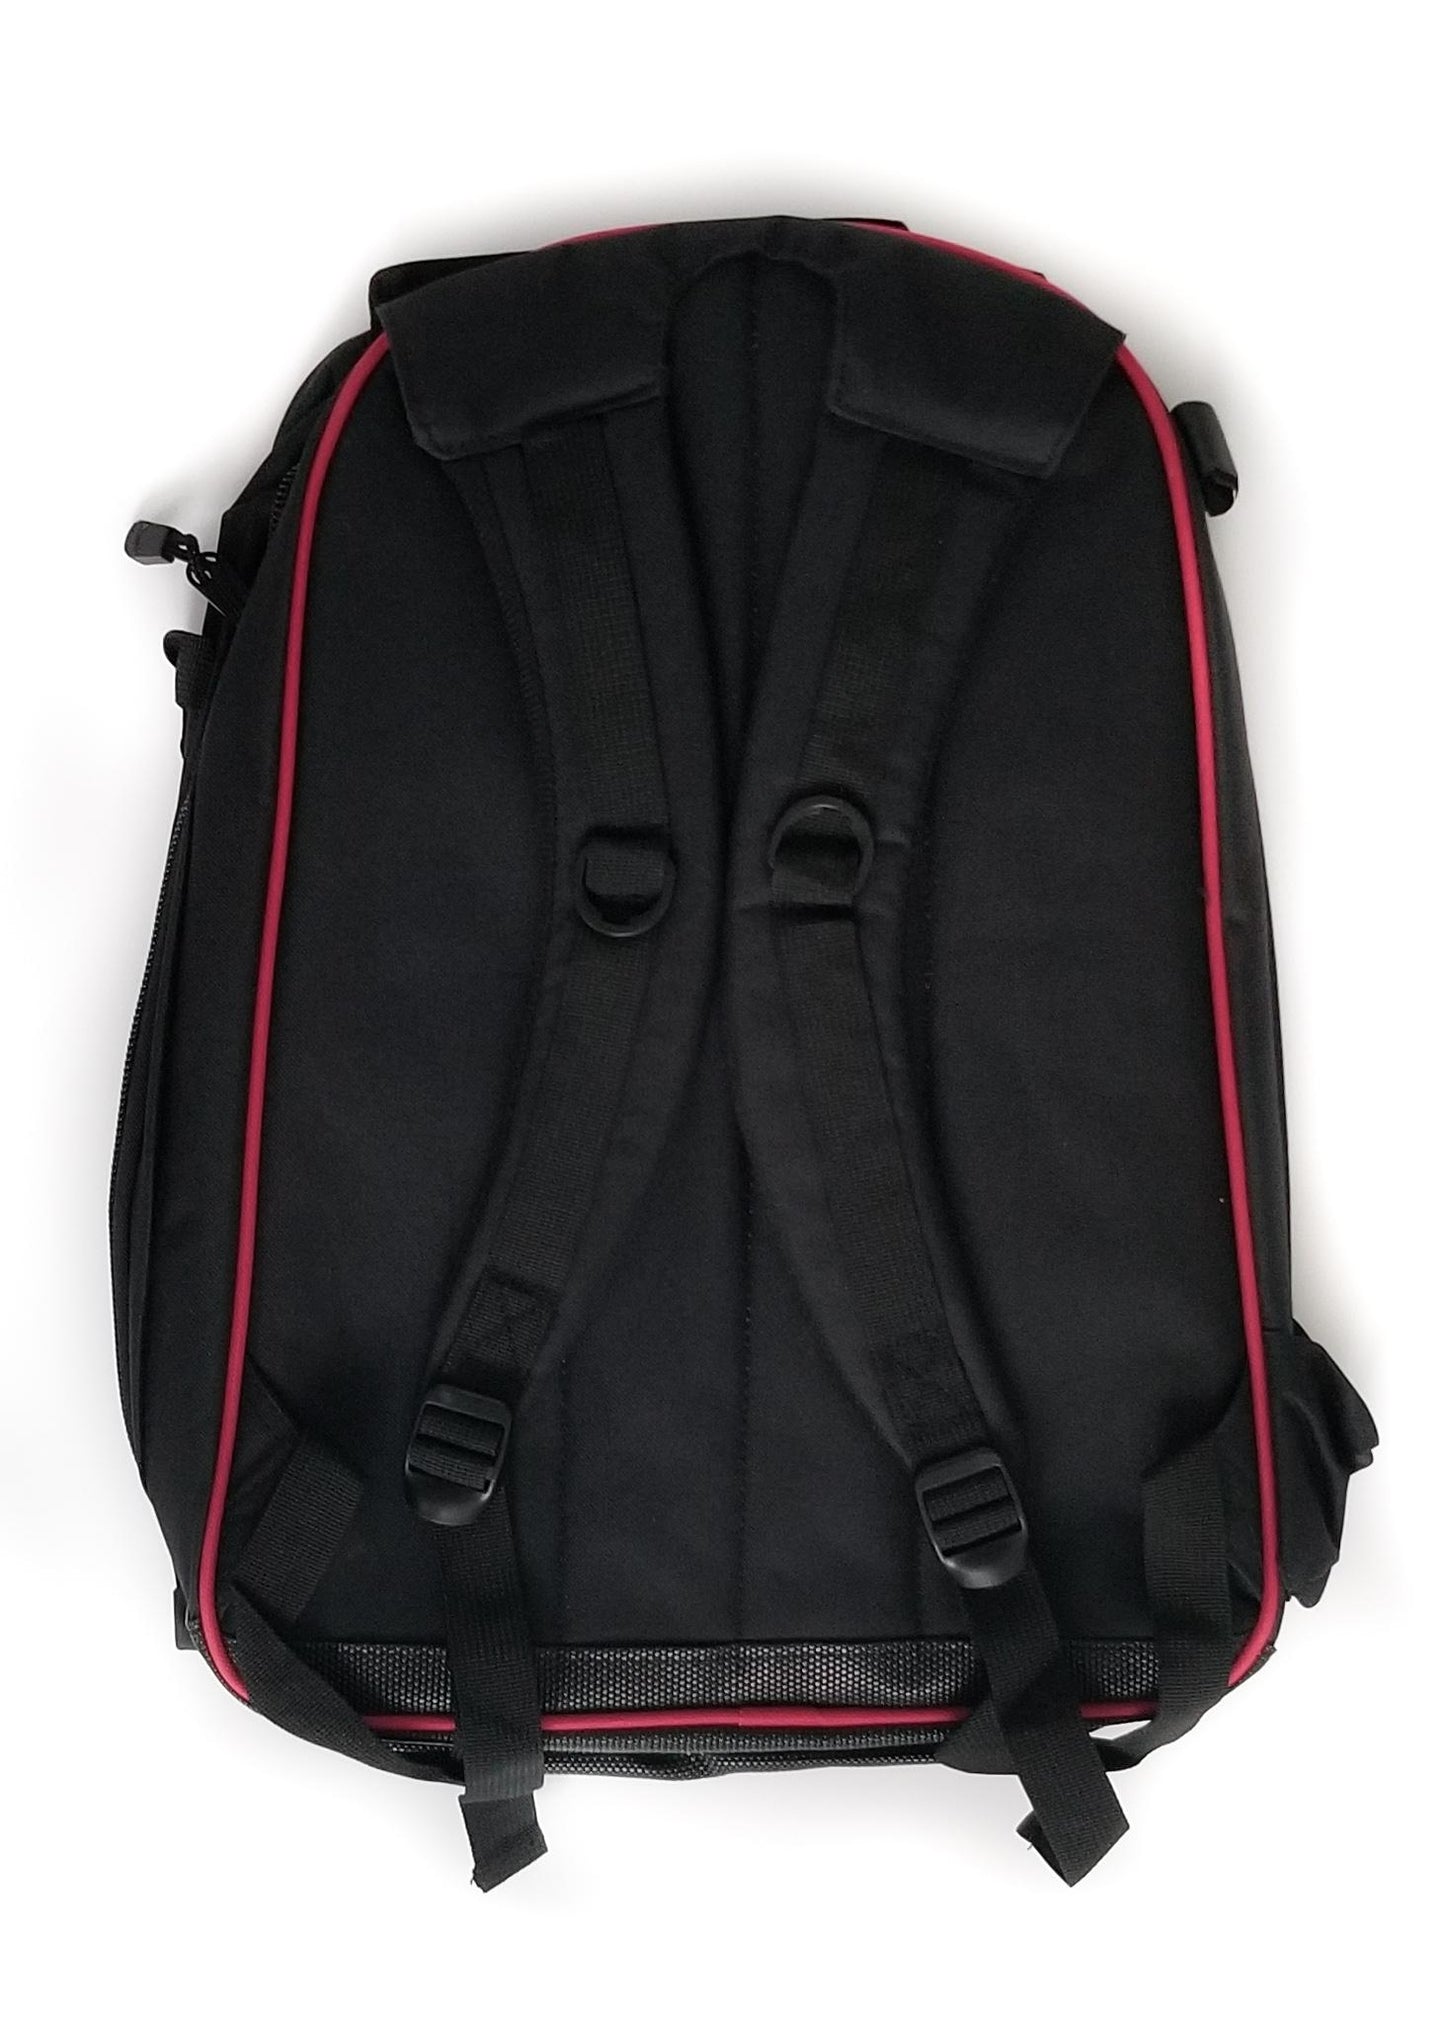 Grand Prix Rider Backpack - Black - One Size